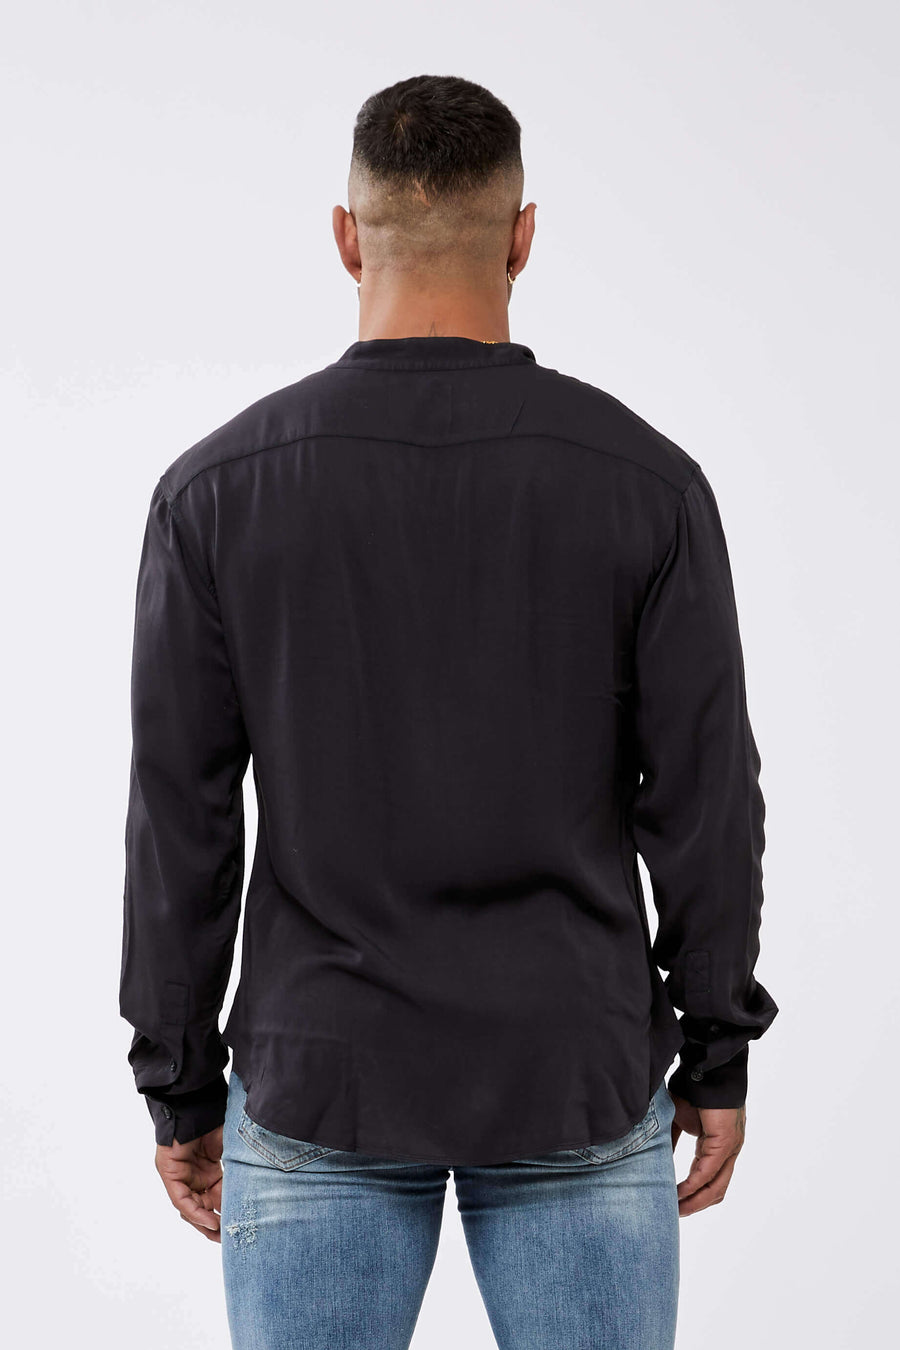 Legend London Shirts Soft Touch Collarless Shirt - Washed Black